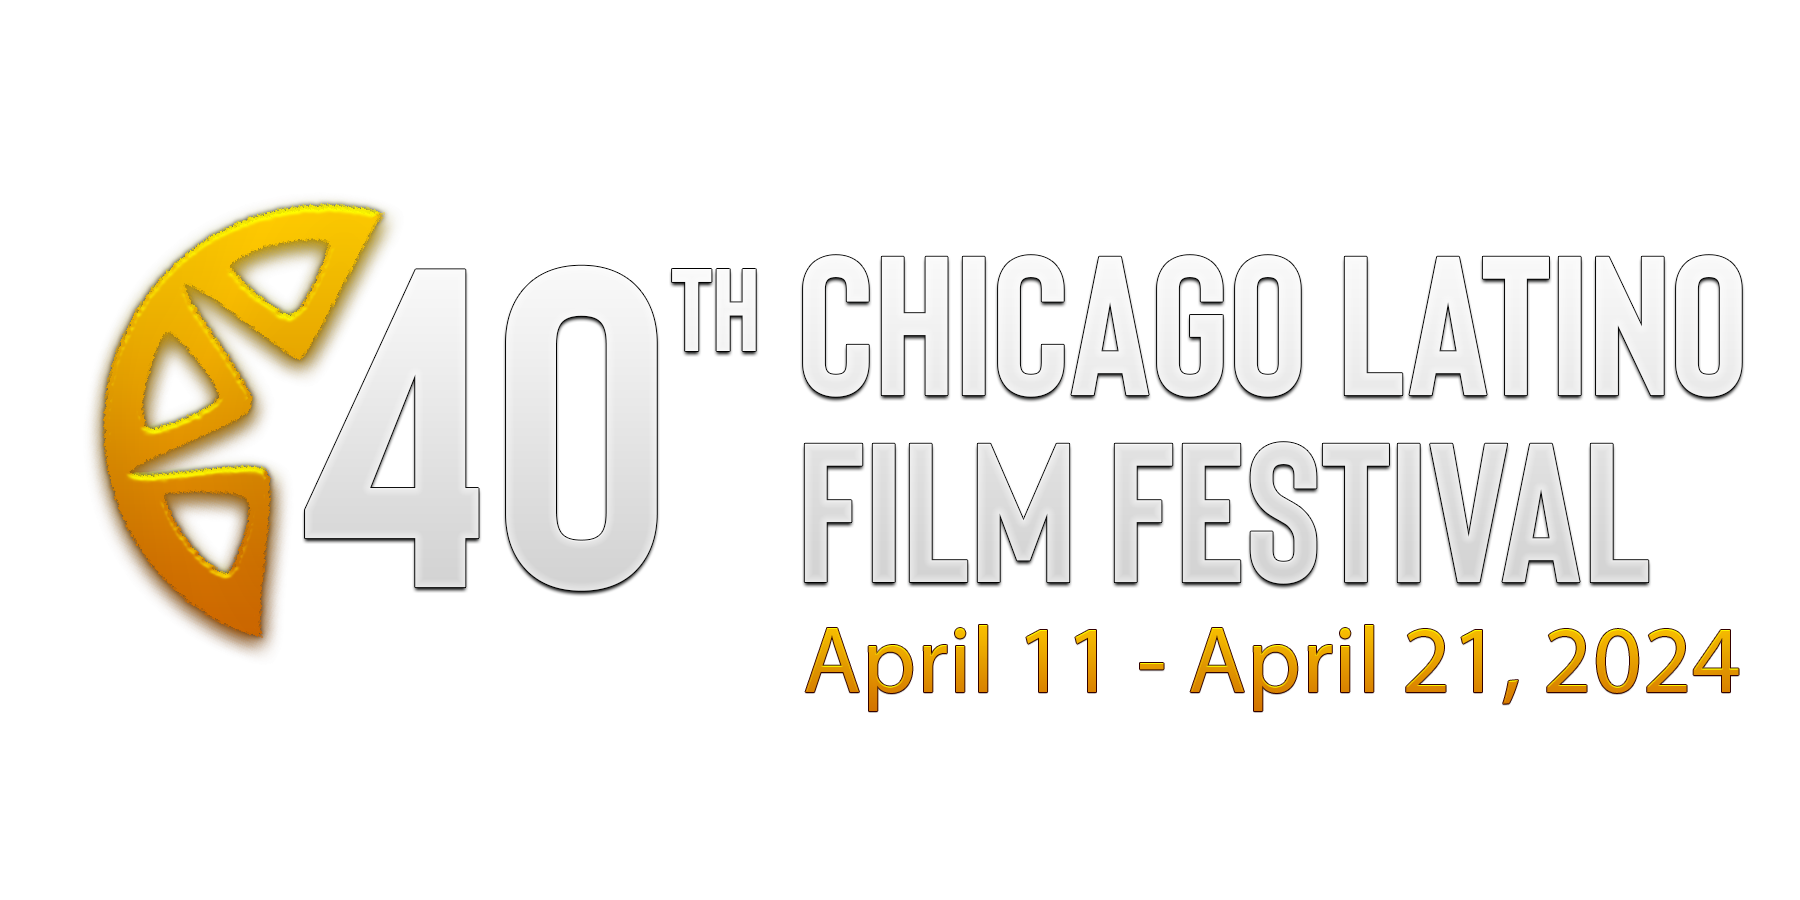 Chicago Latino Film Festival Longest Running Latino Film Fest in the USA